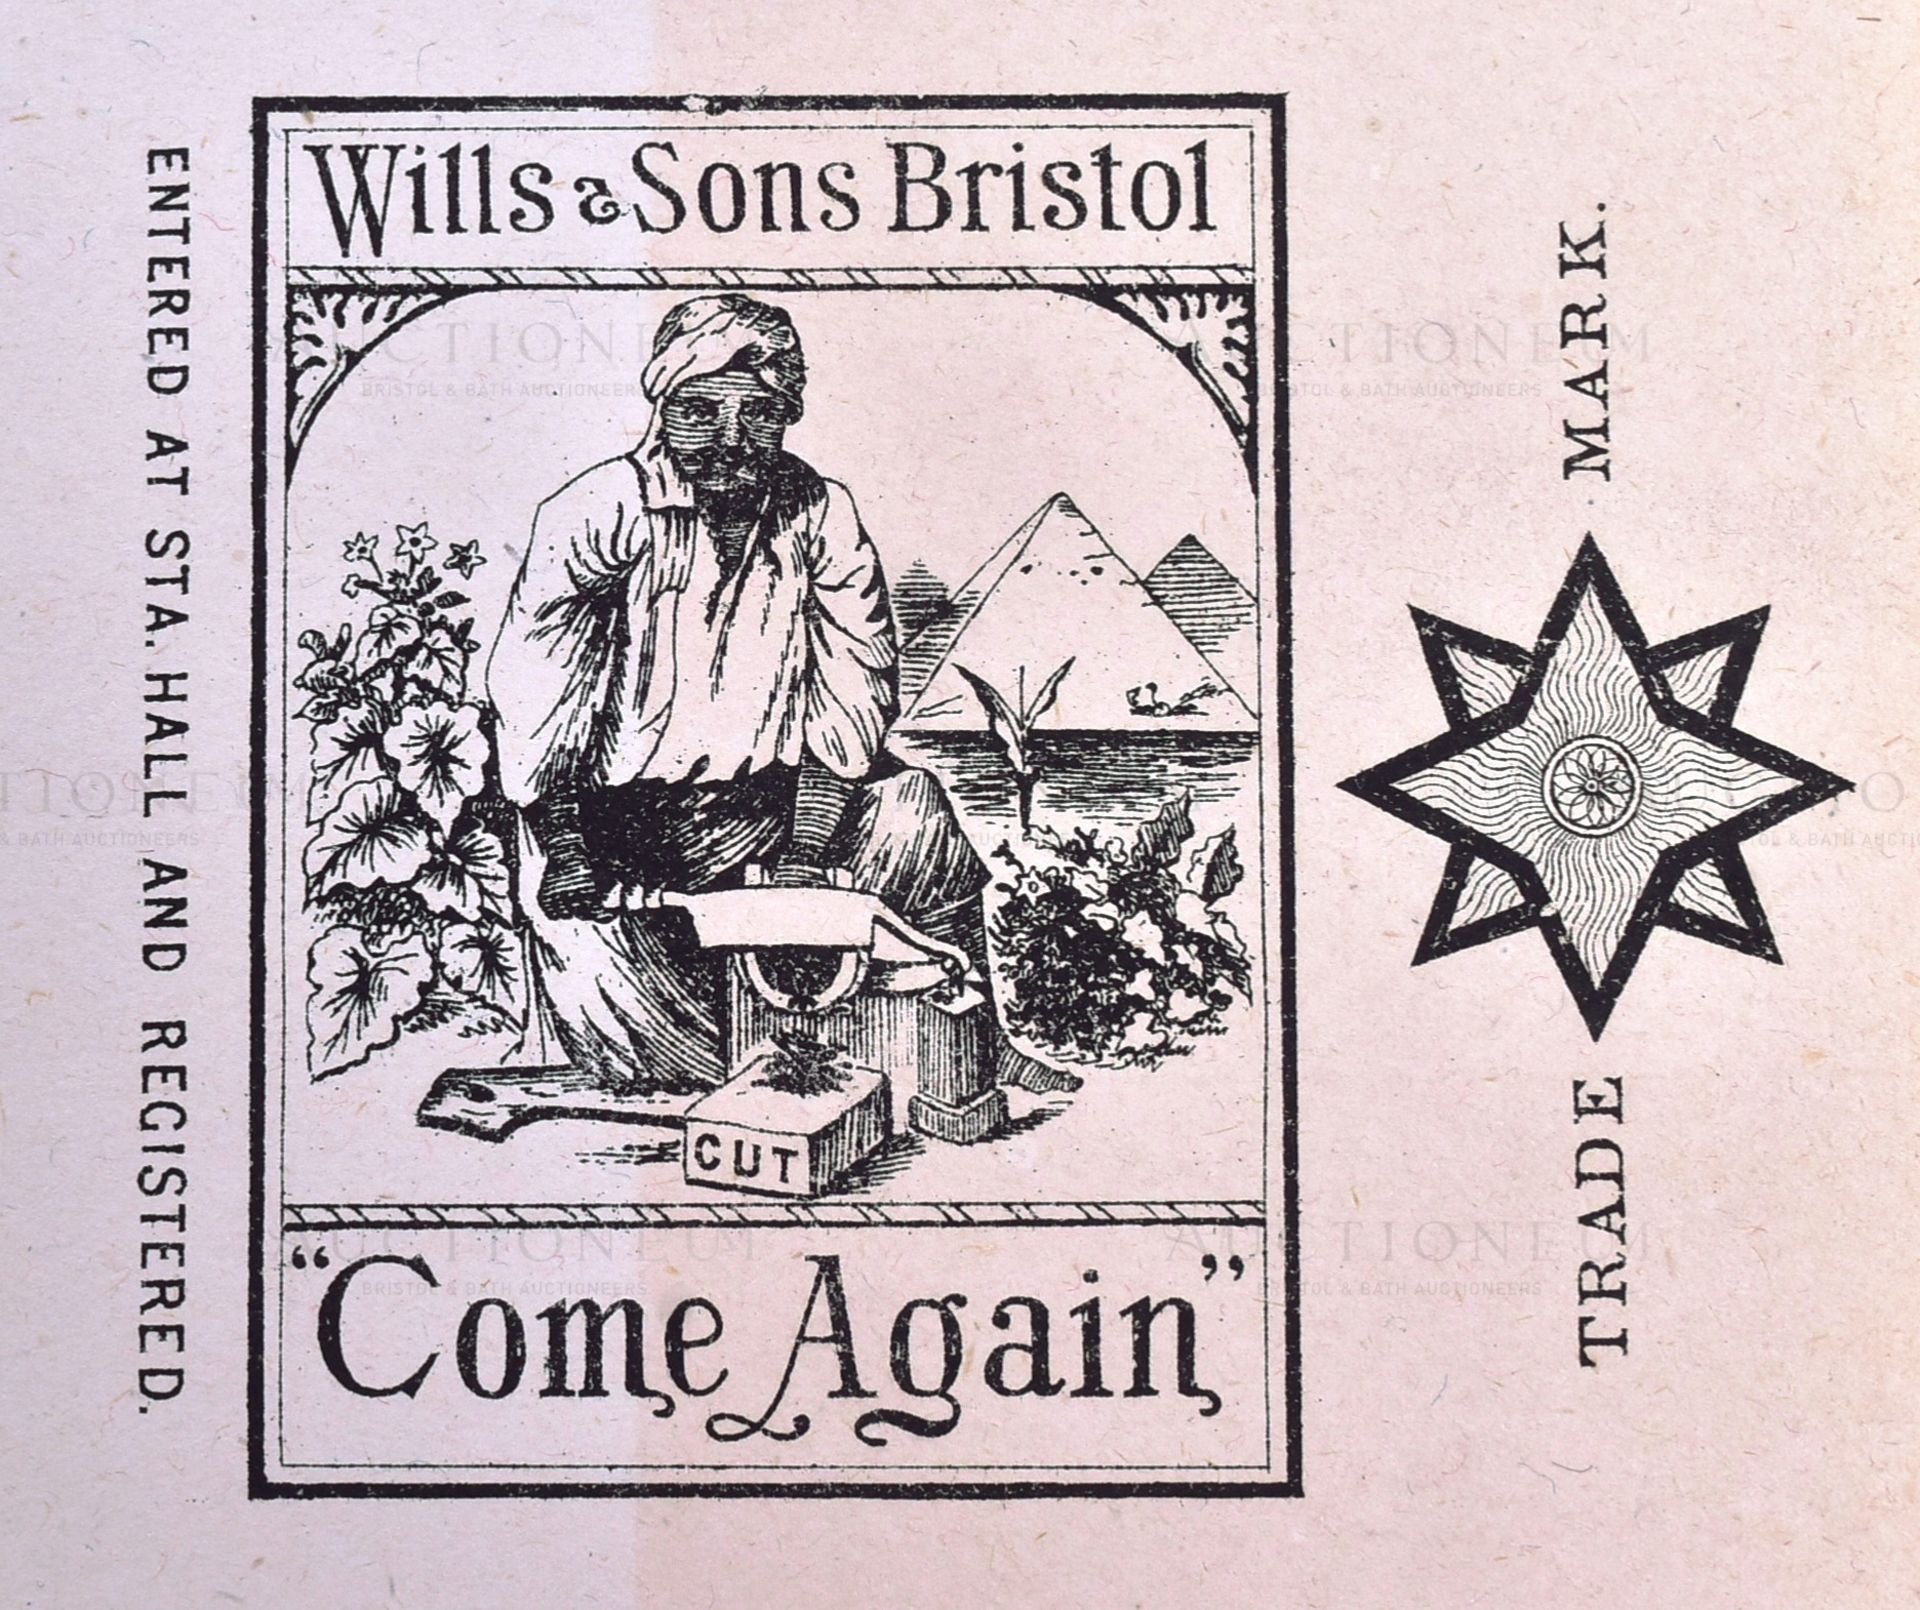 MARDON, SON & HALL - 19TH CENTURY CIGARETTE PACKET DESIGNS - Image 2 of 4